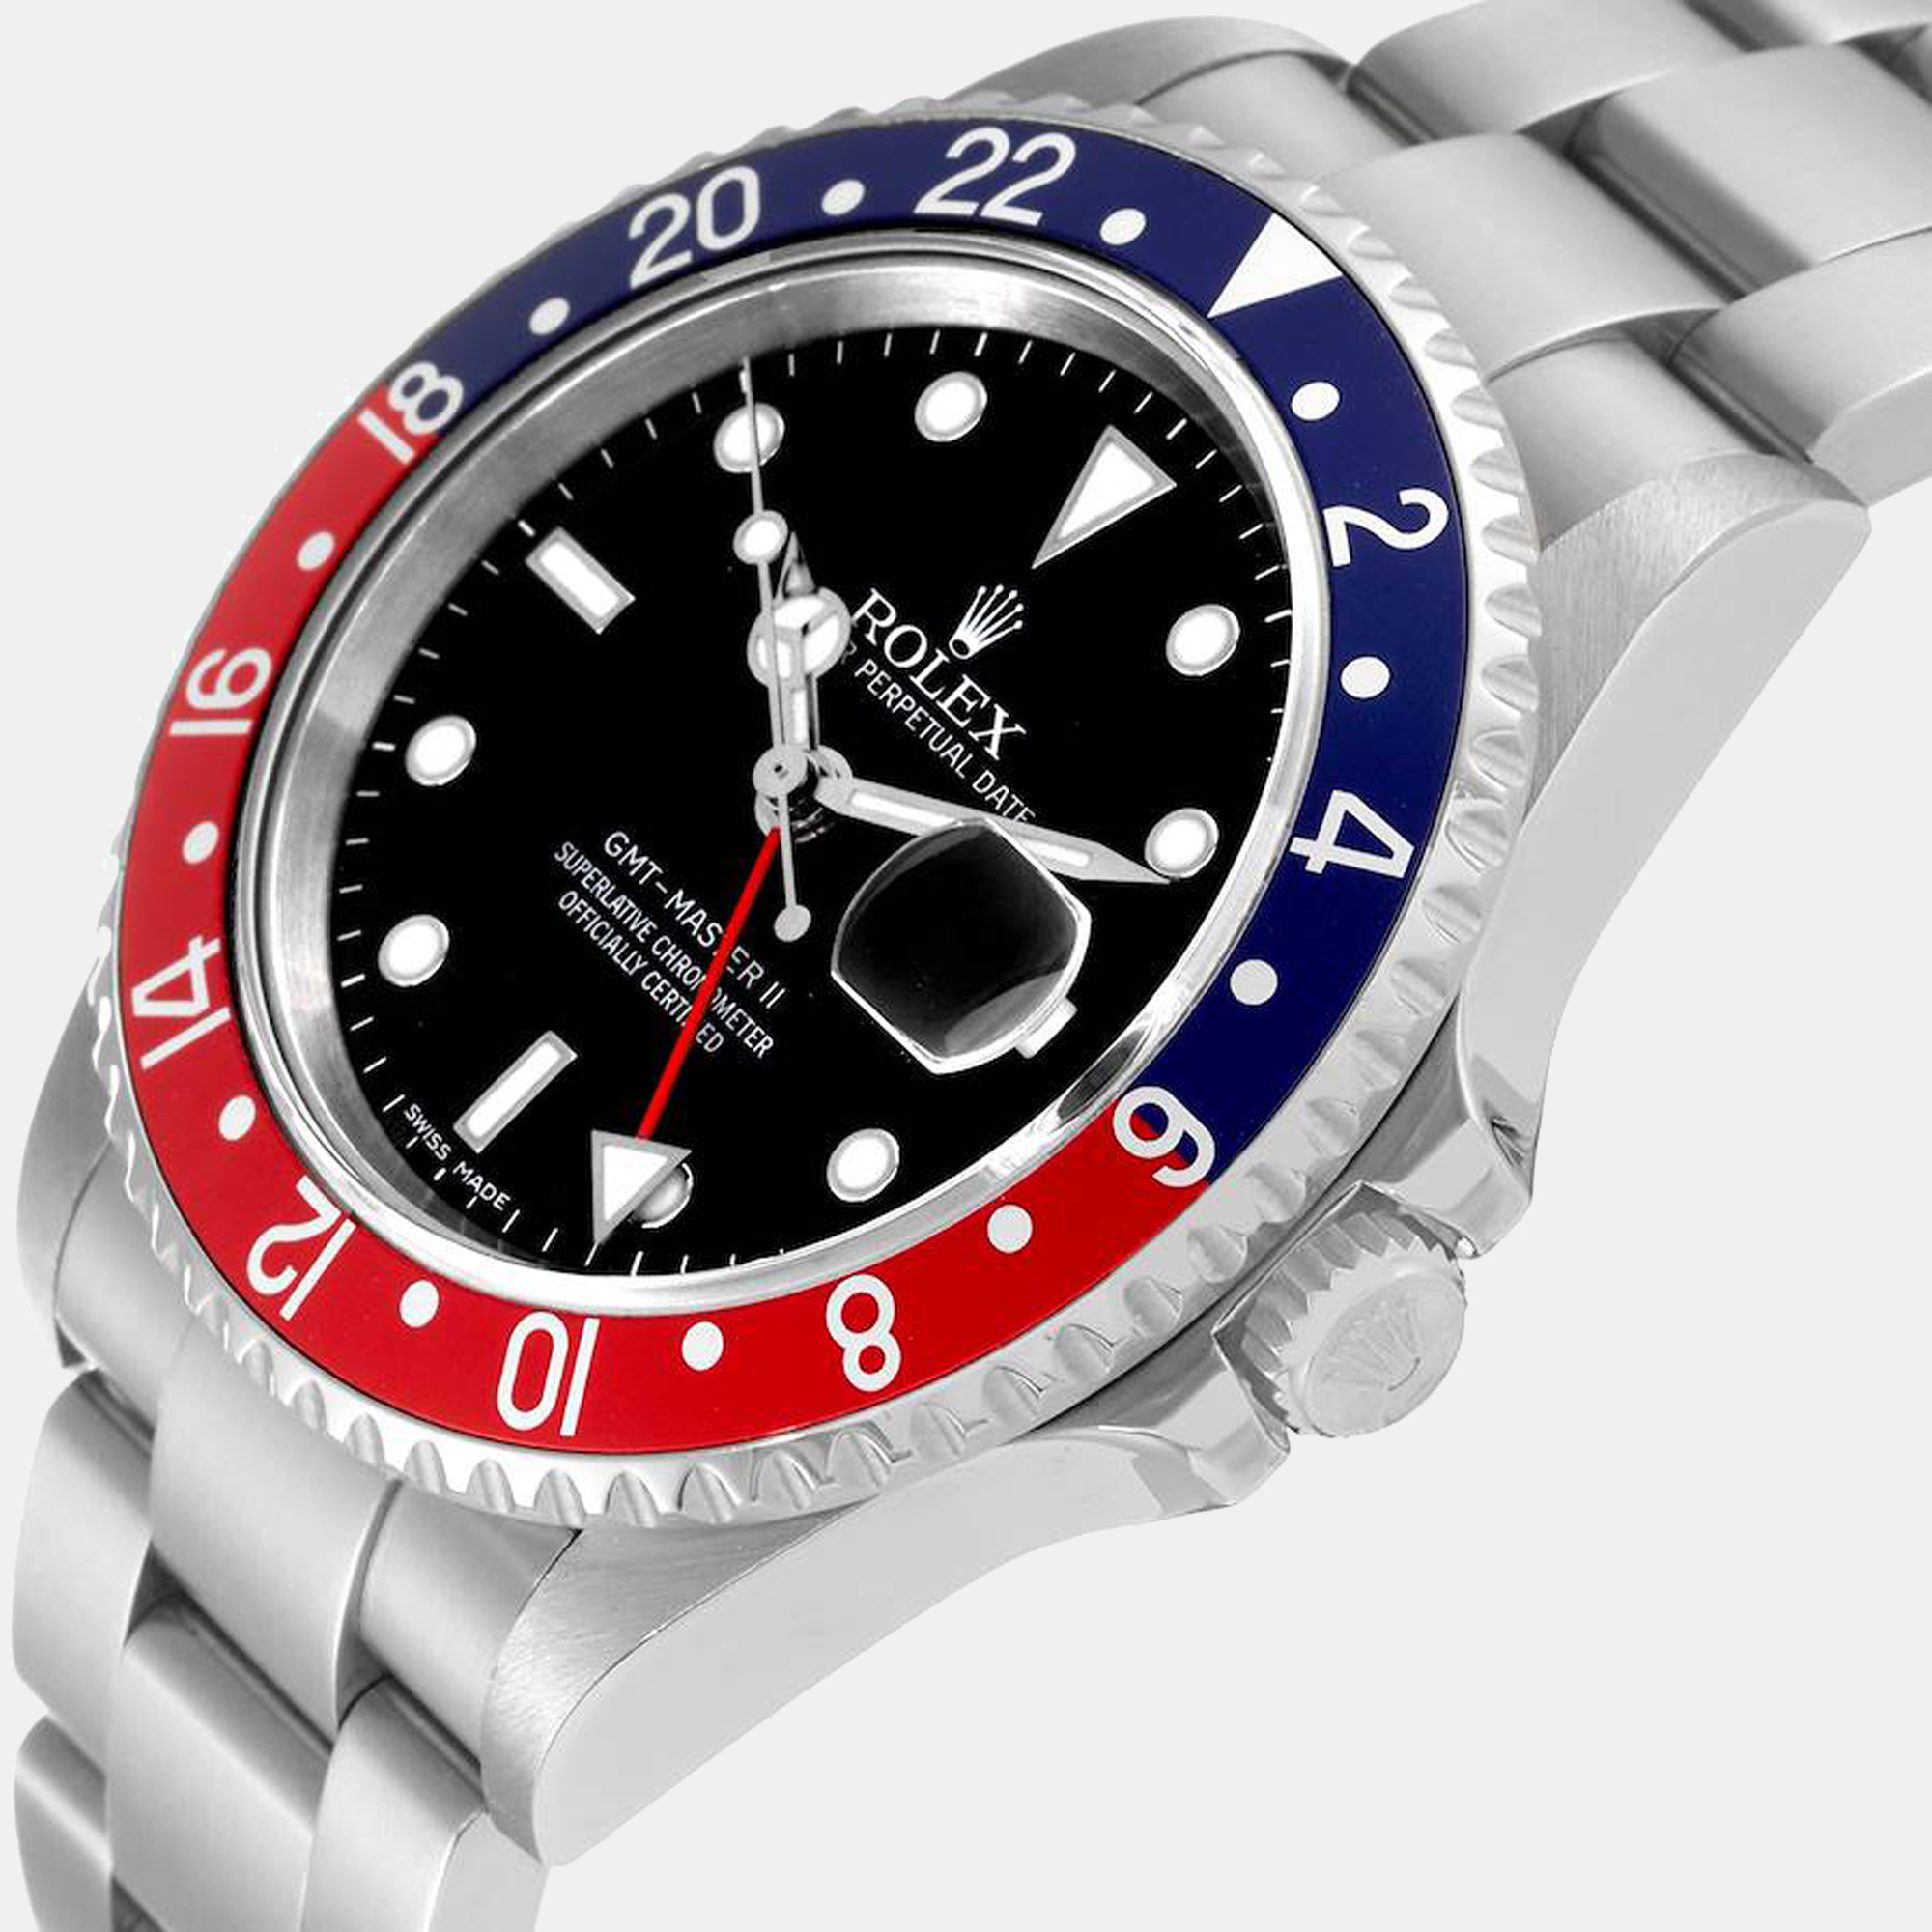 

Rolex GMT Master II Blue Red Pepsi Error Dial Men's Watch 16710, Black